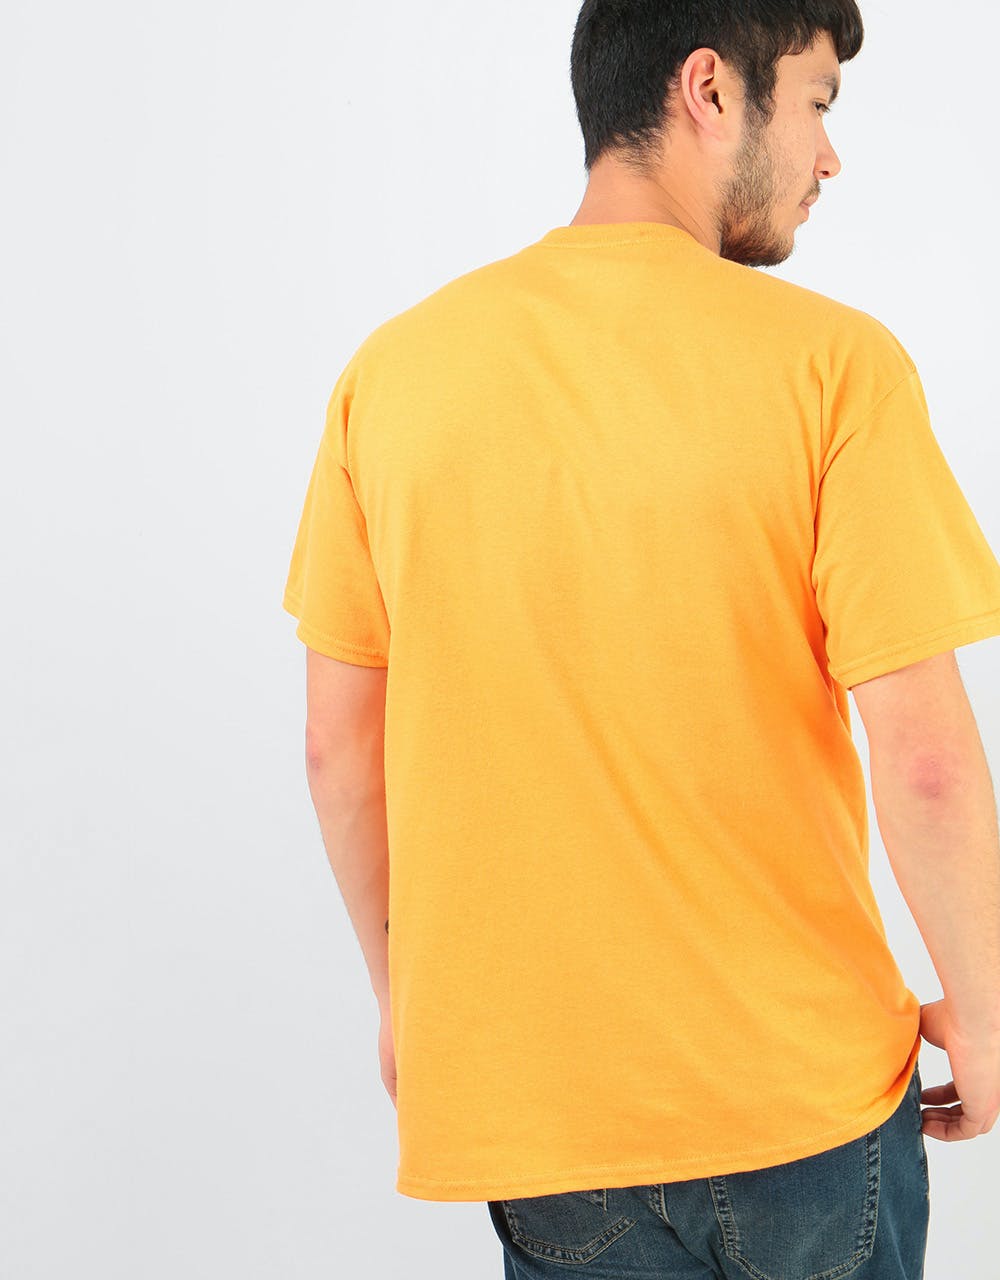 Route One Bauhaus T-Shirt - Tangerine